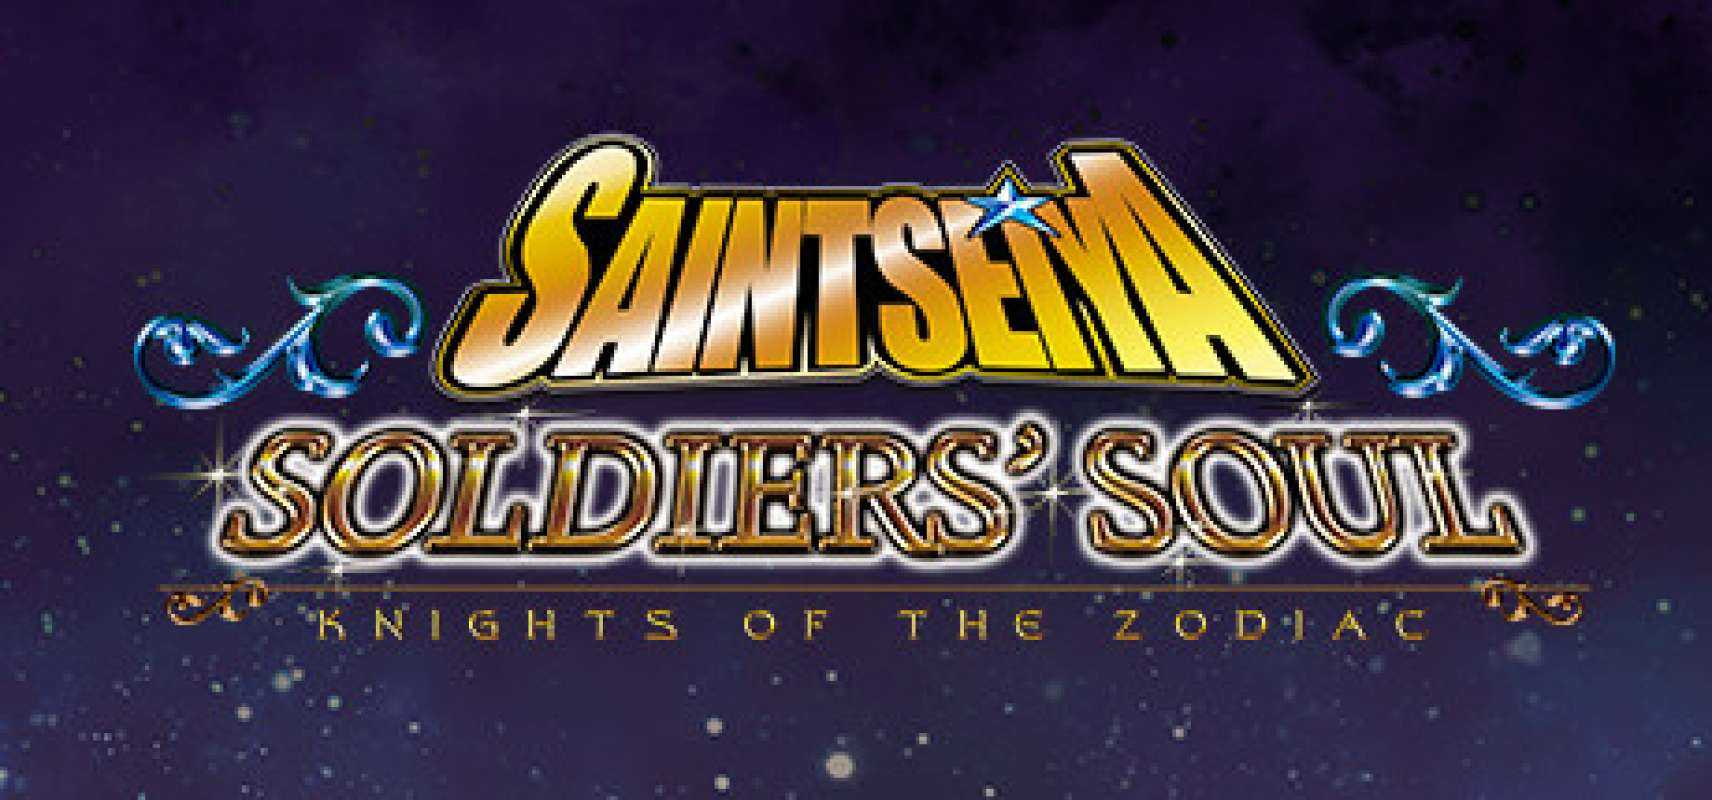 Saint Seiya: Soldiers` Soul